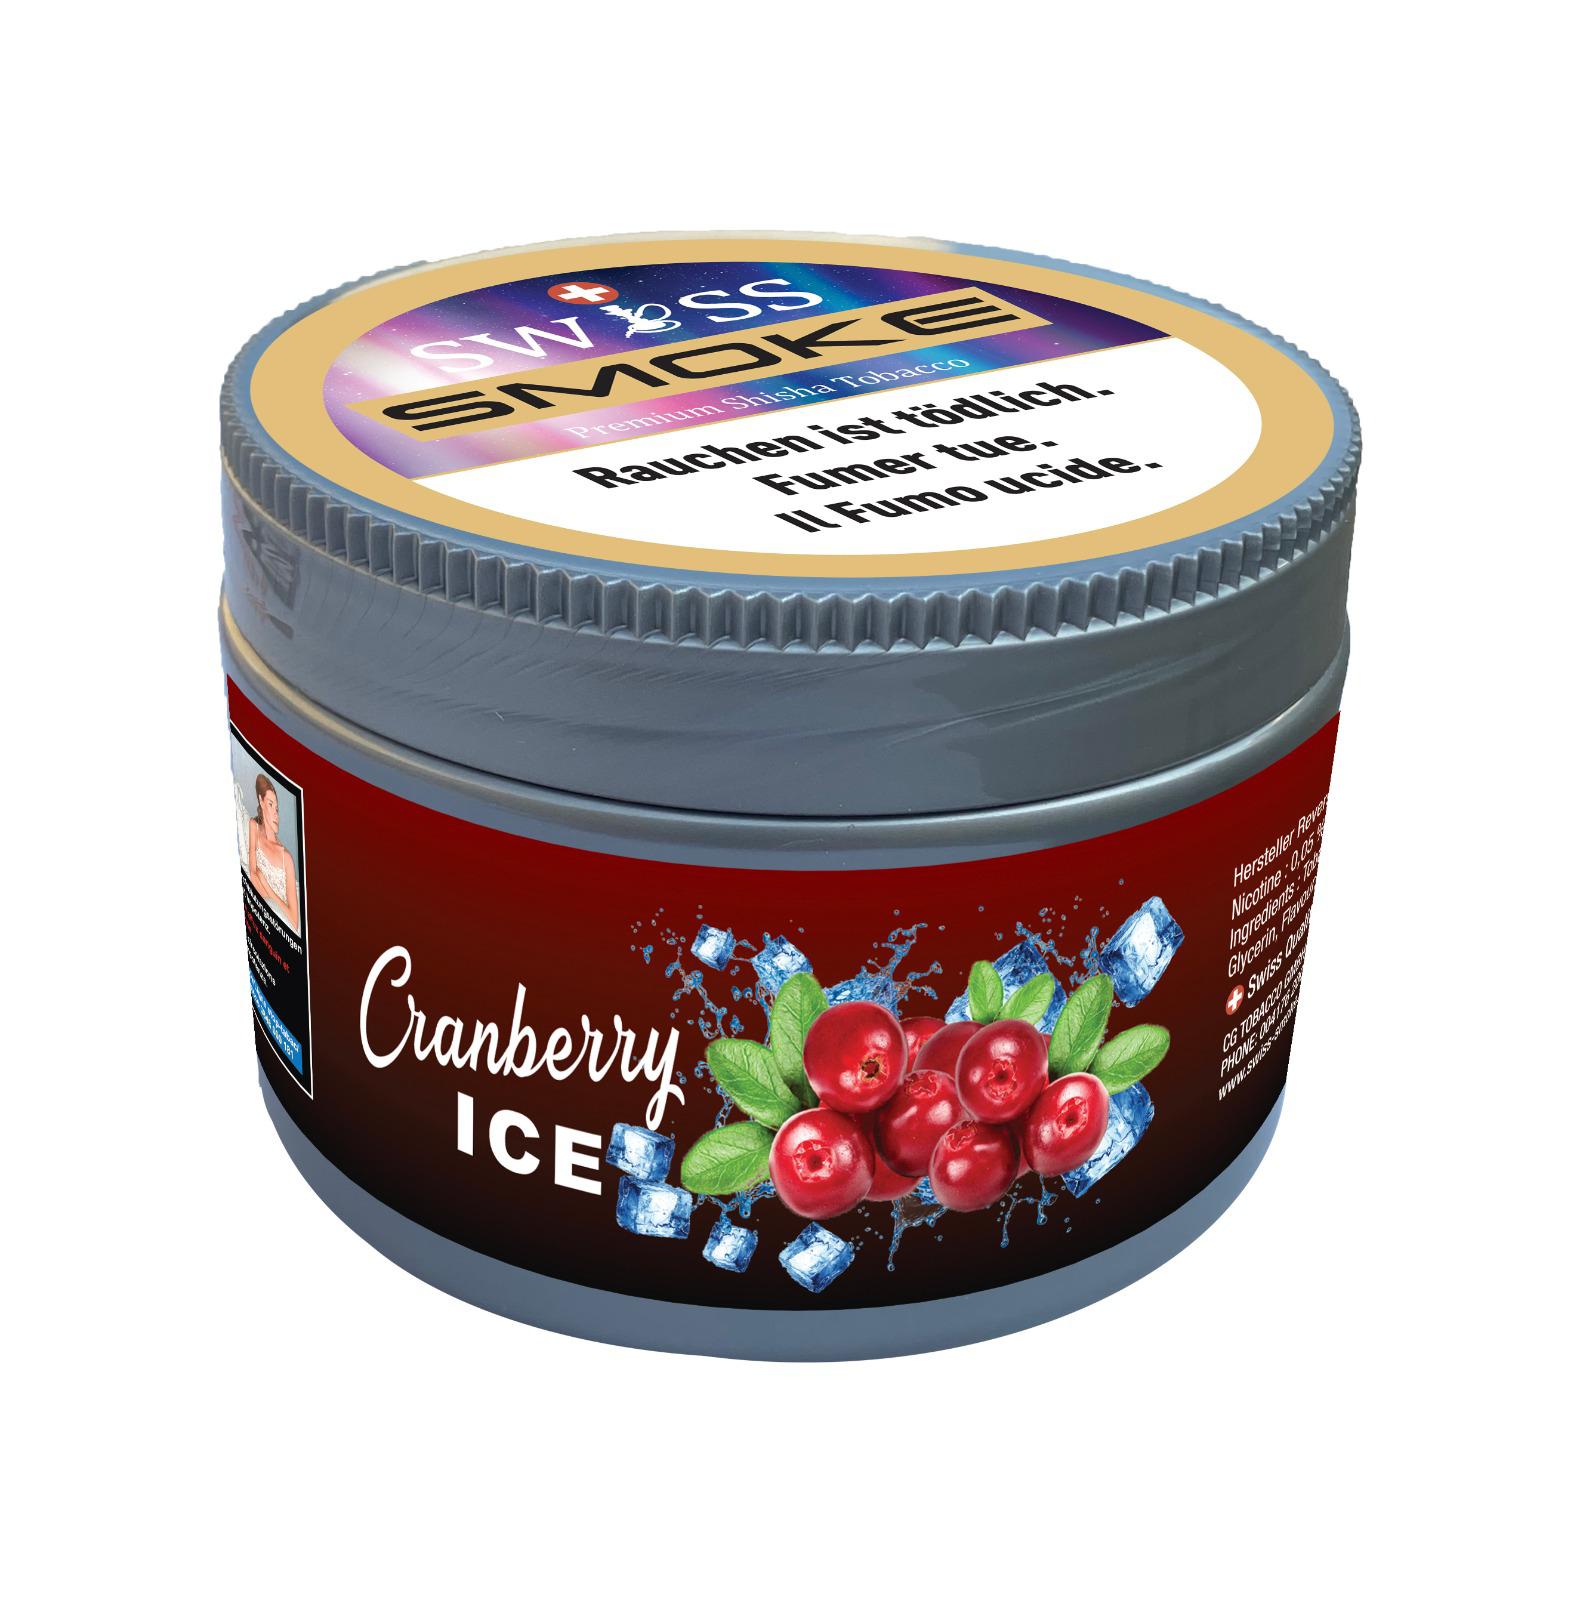 Cranberry Ice 200g